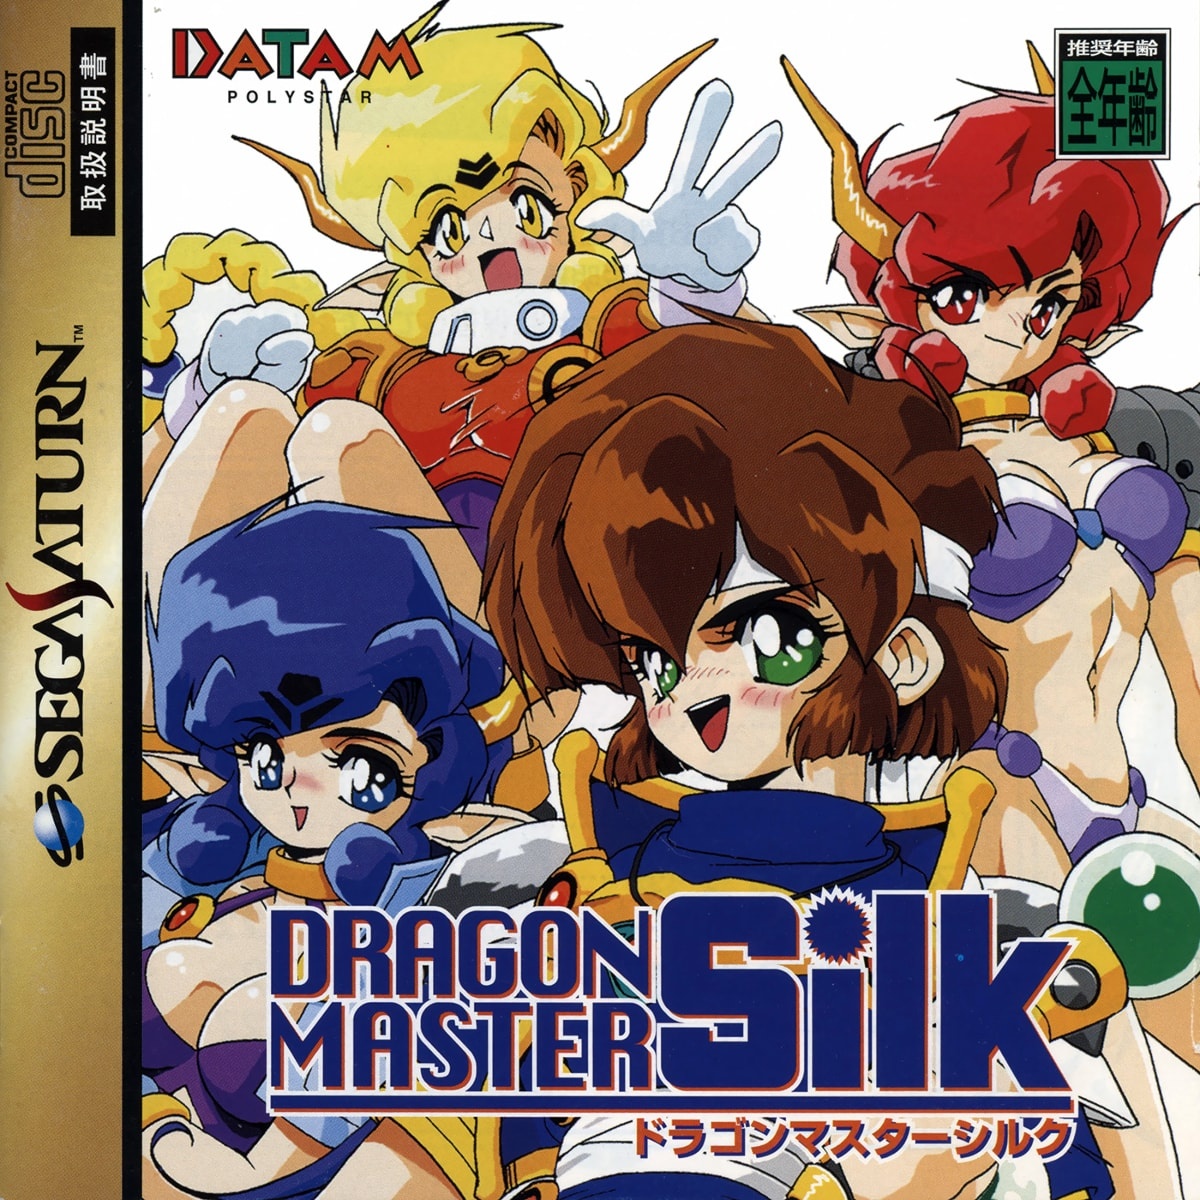 Capa do jogo Dragon Master Silk